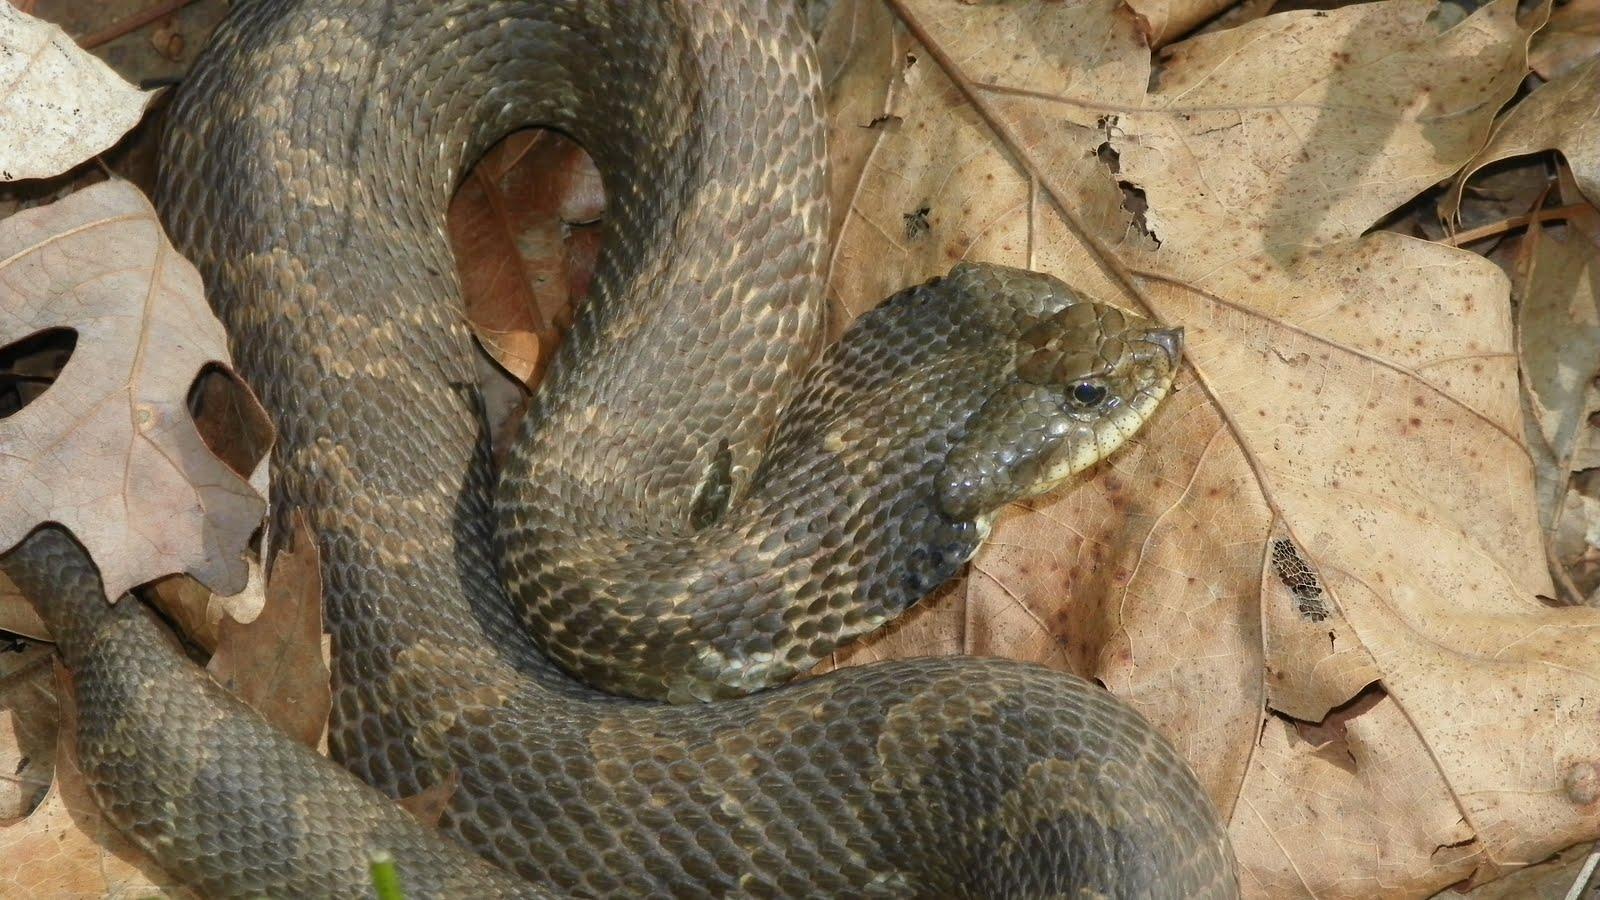 Sidewinder snake image dowload